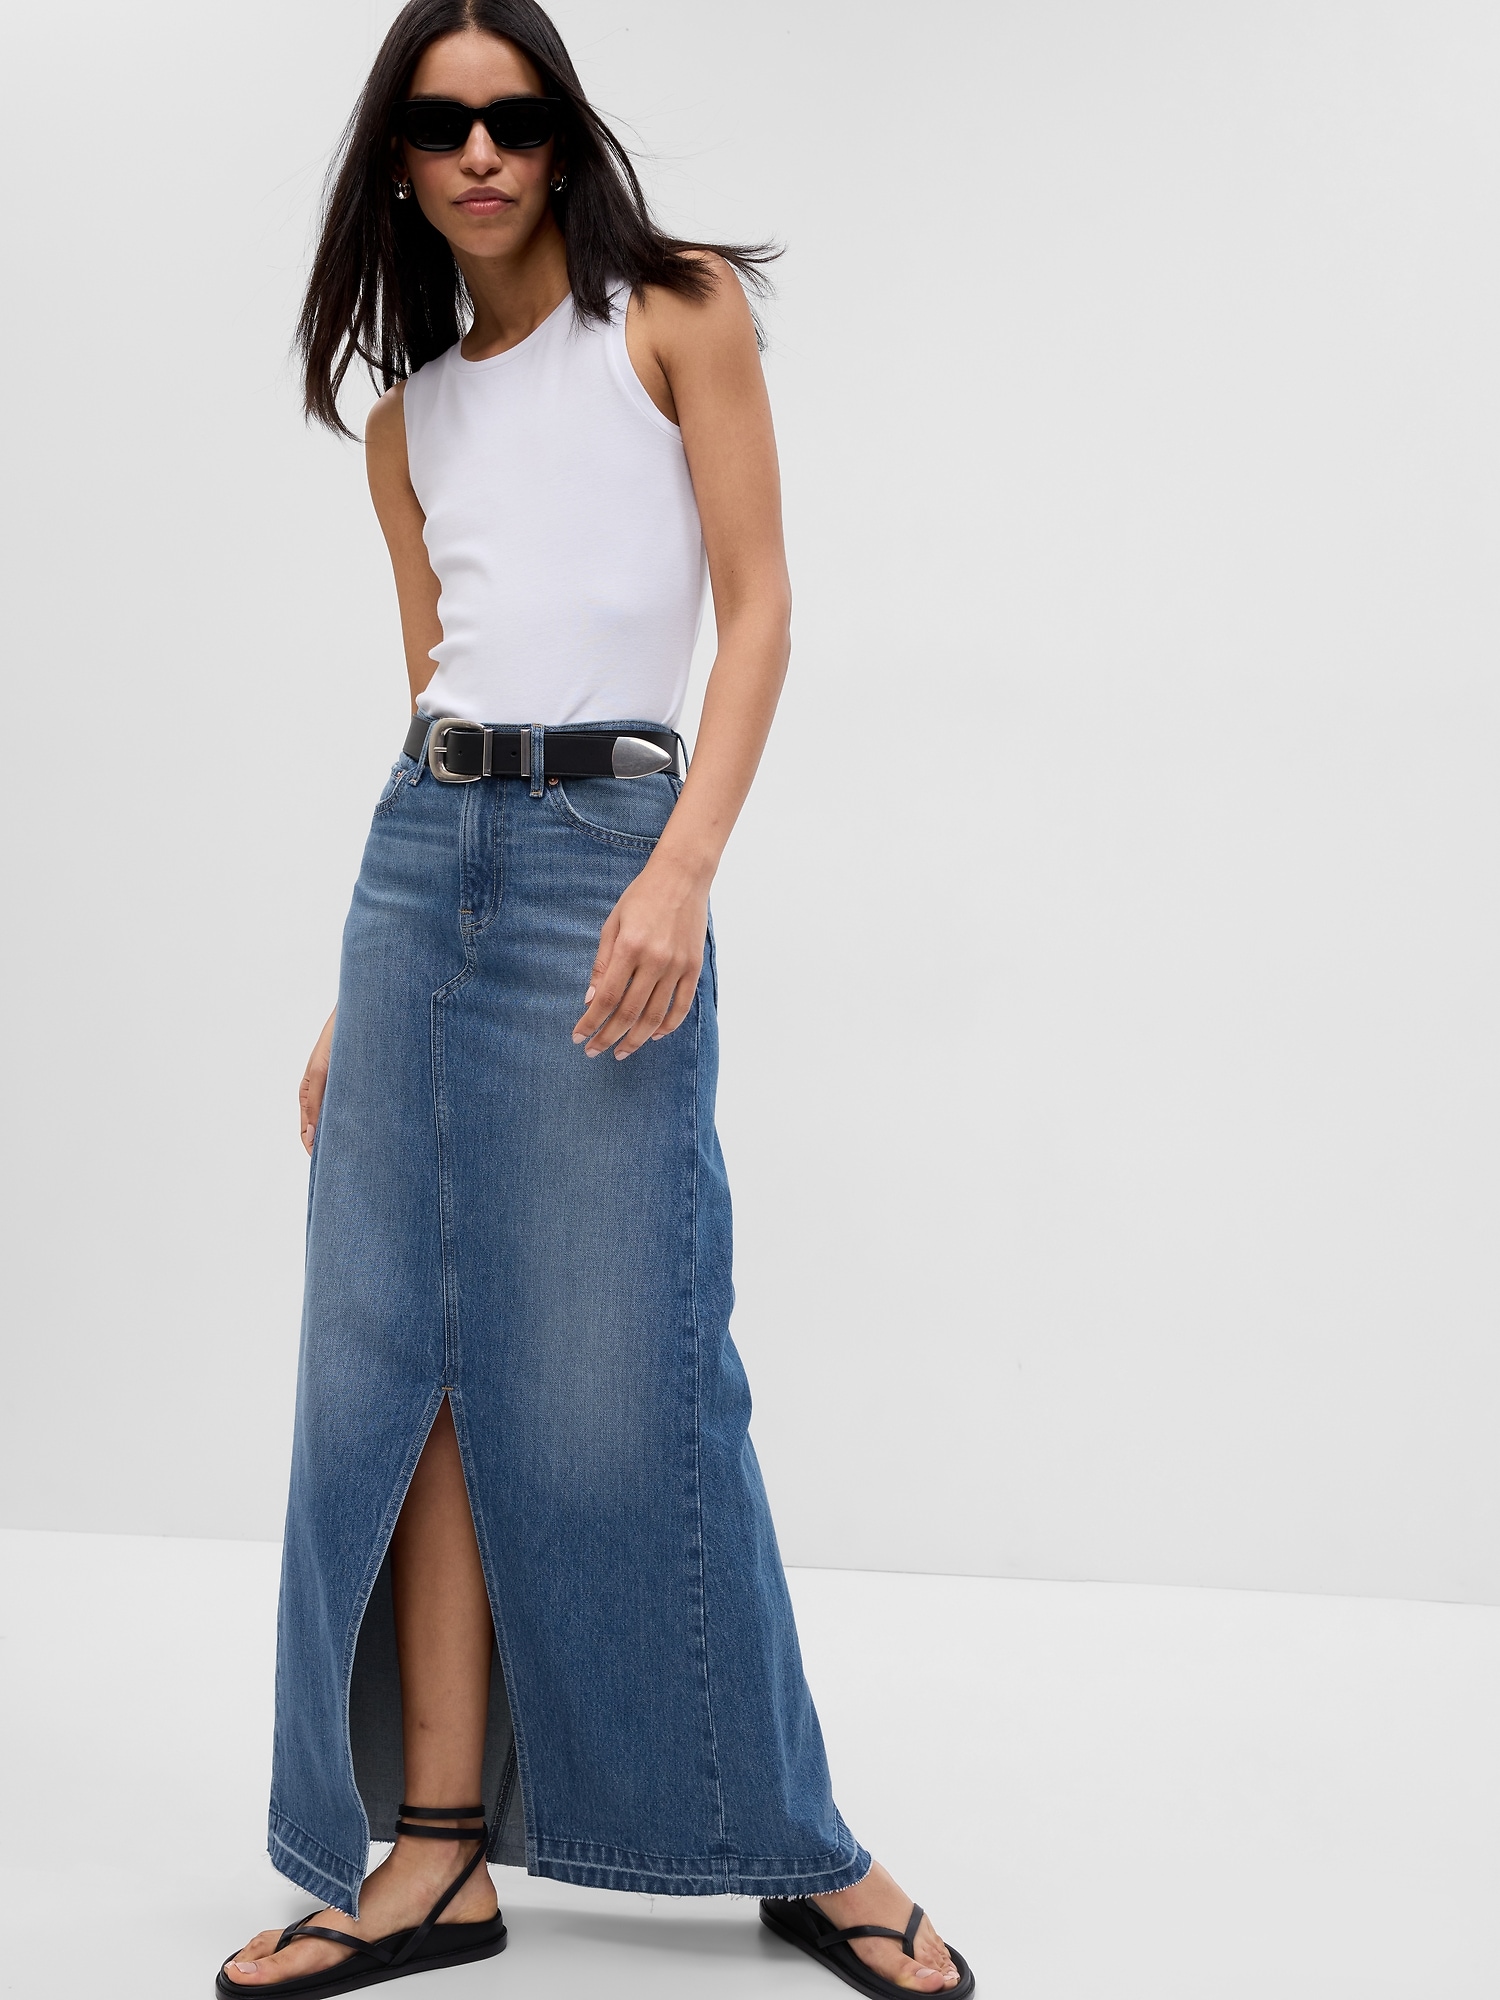 Denim Maxi Skirt | Gap